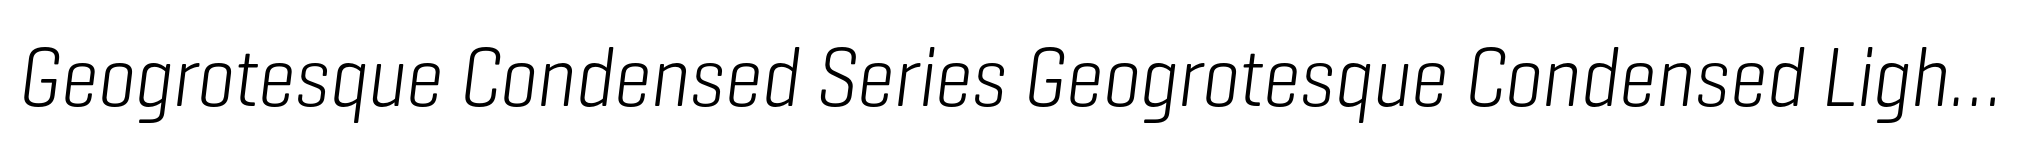 Geogrotesque Condensed Series Geogrotesque Condensed Light Italic image